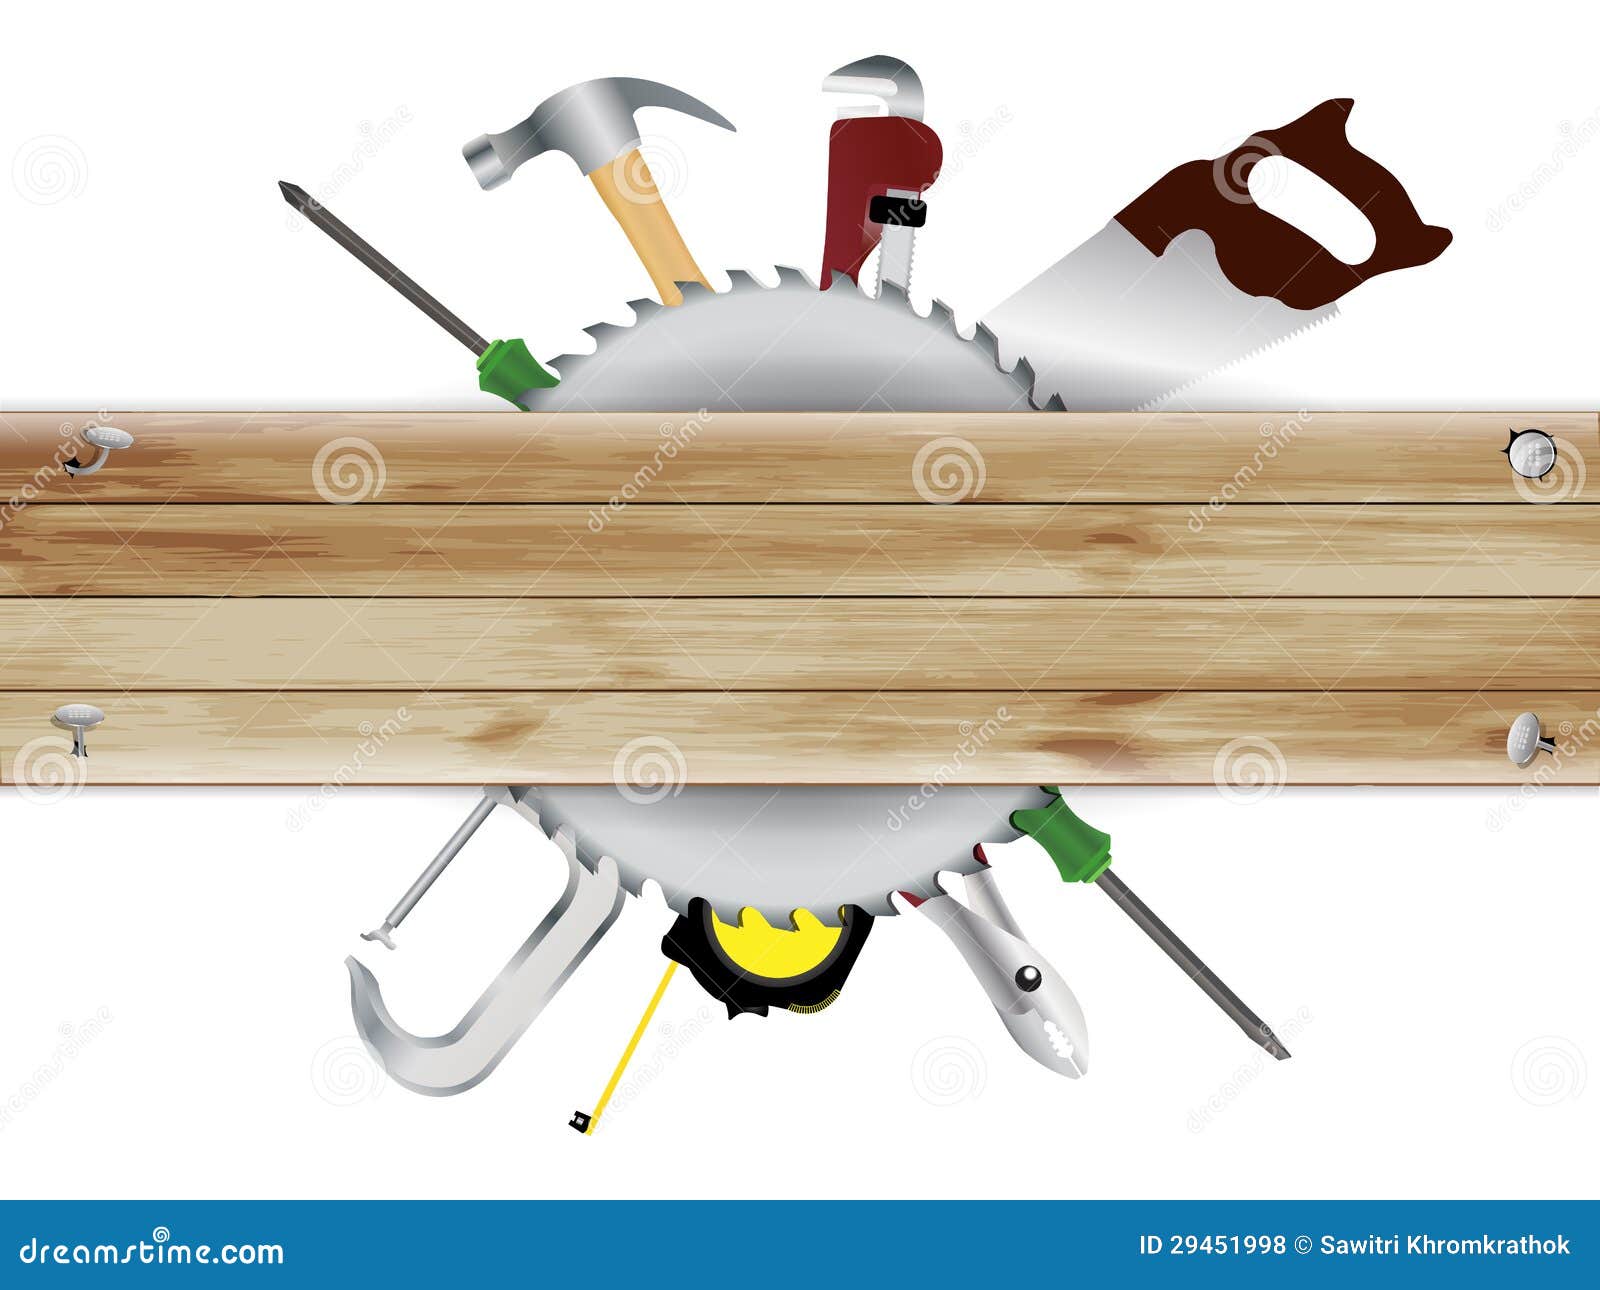 carpentry tools clip art free - photo #8